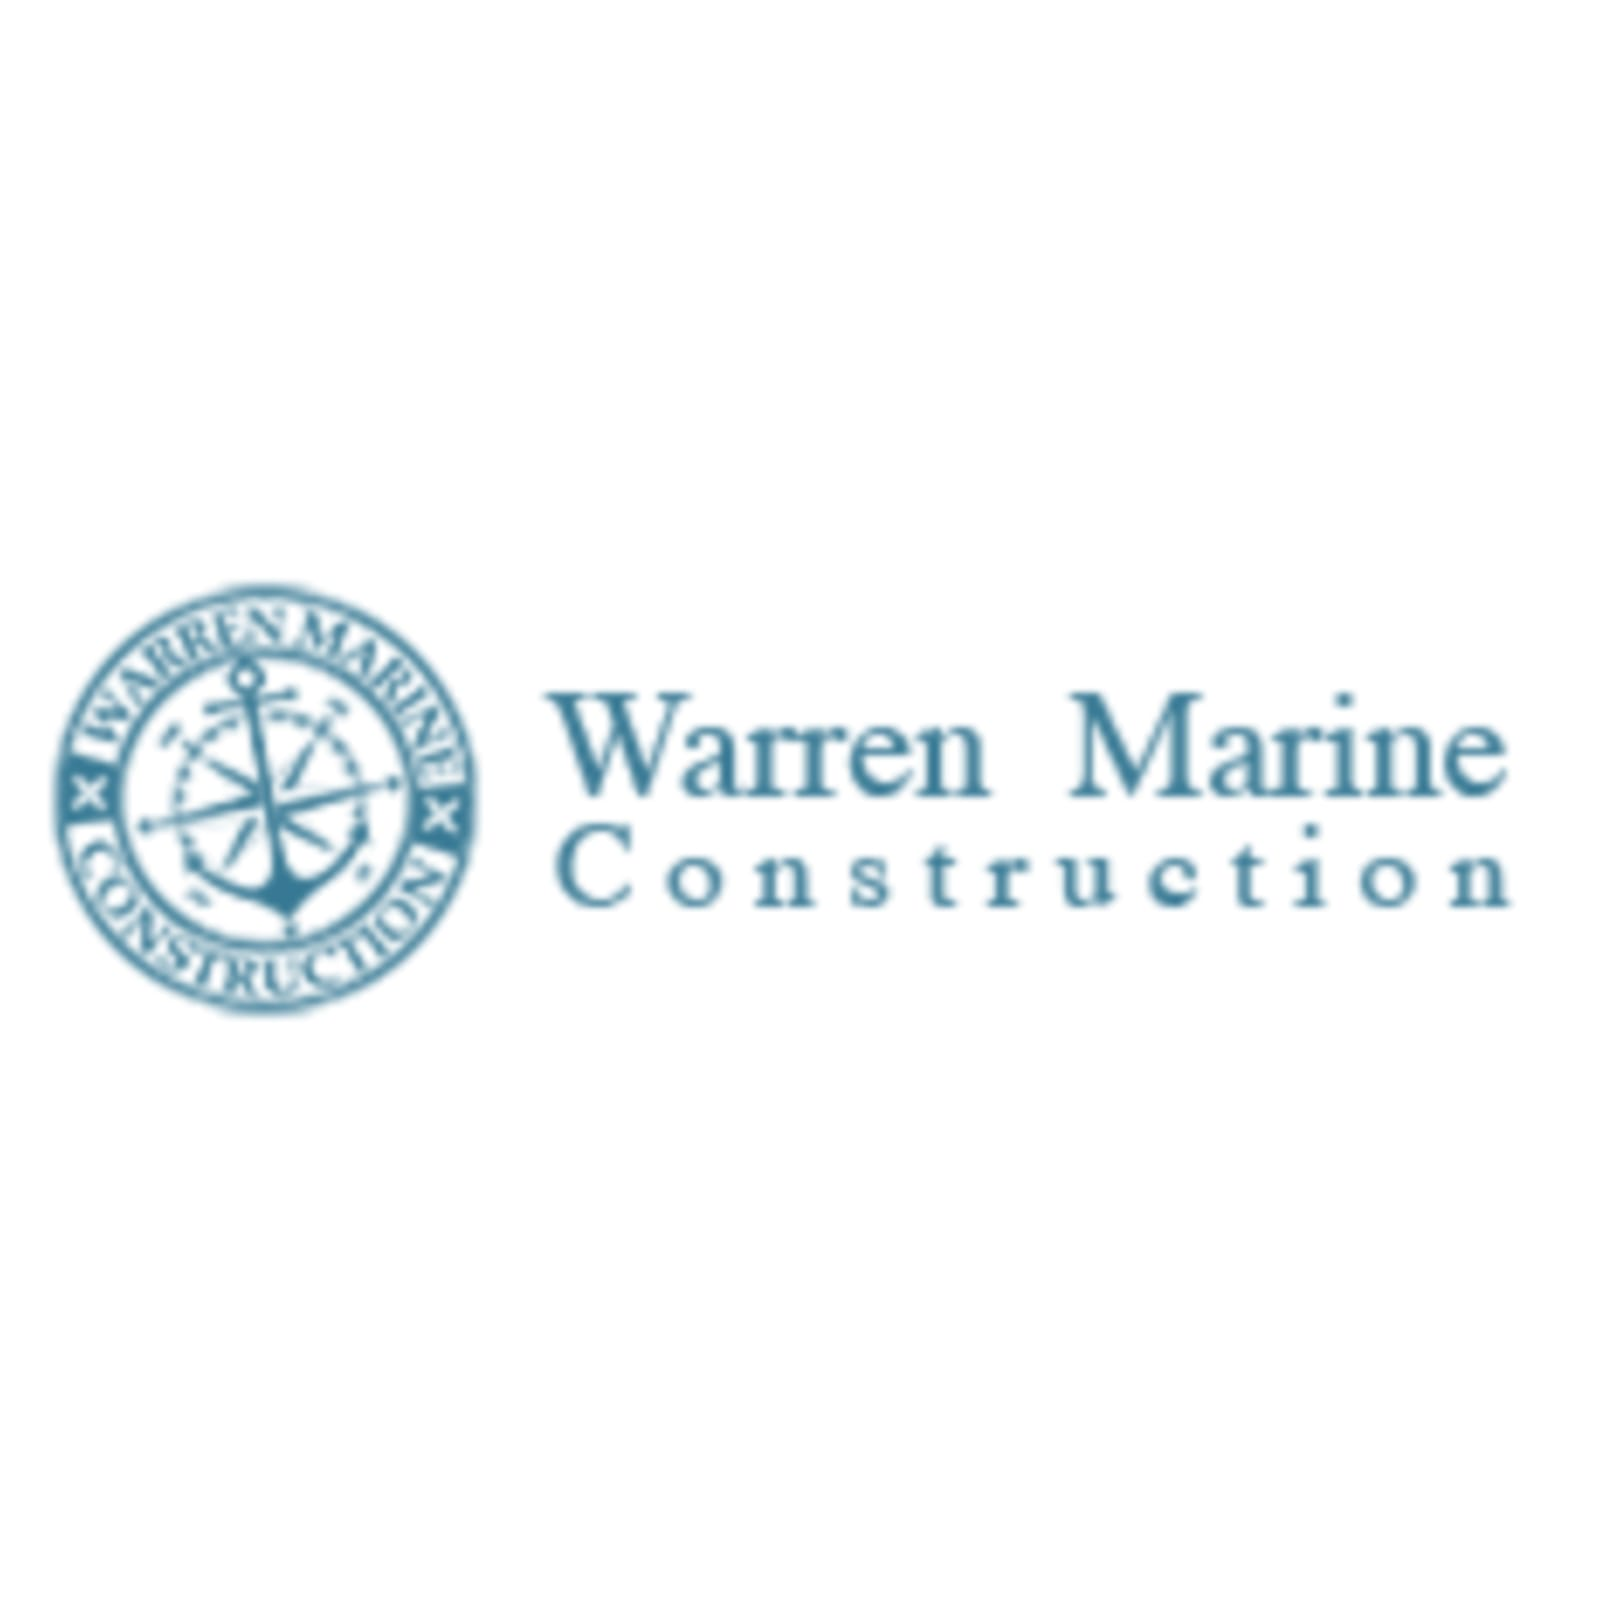 Warren Marine Construction Logo